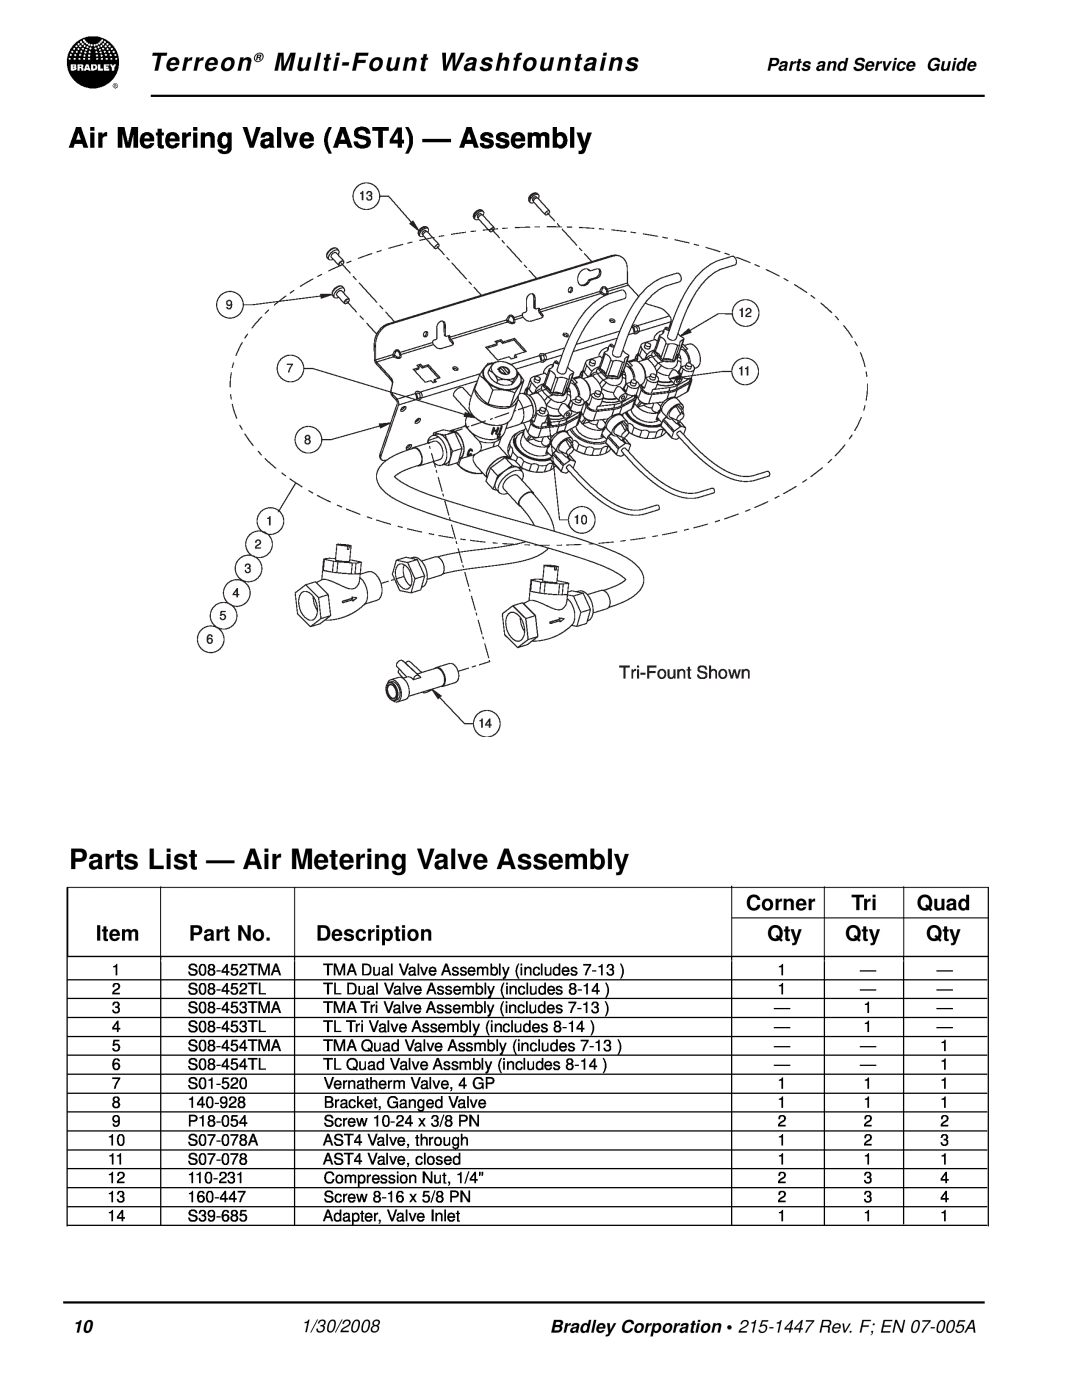 Bradley Smoker Indoor Furnishings Air Metering Valve AST4 - Assembly, Parts List - Air Metering Valve Assembly, Corner 